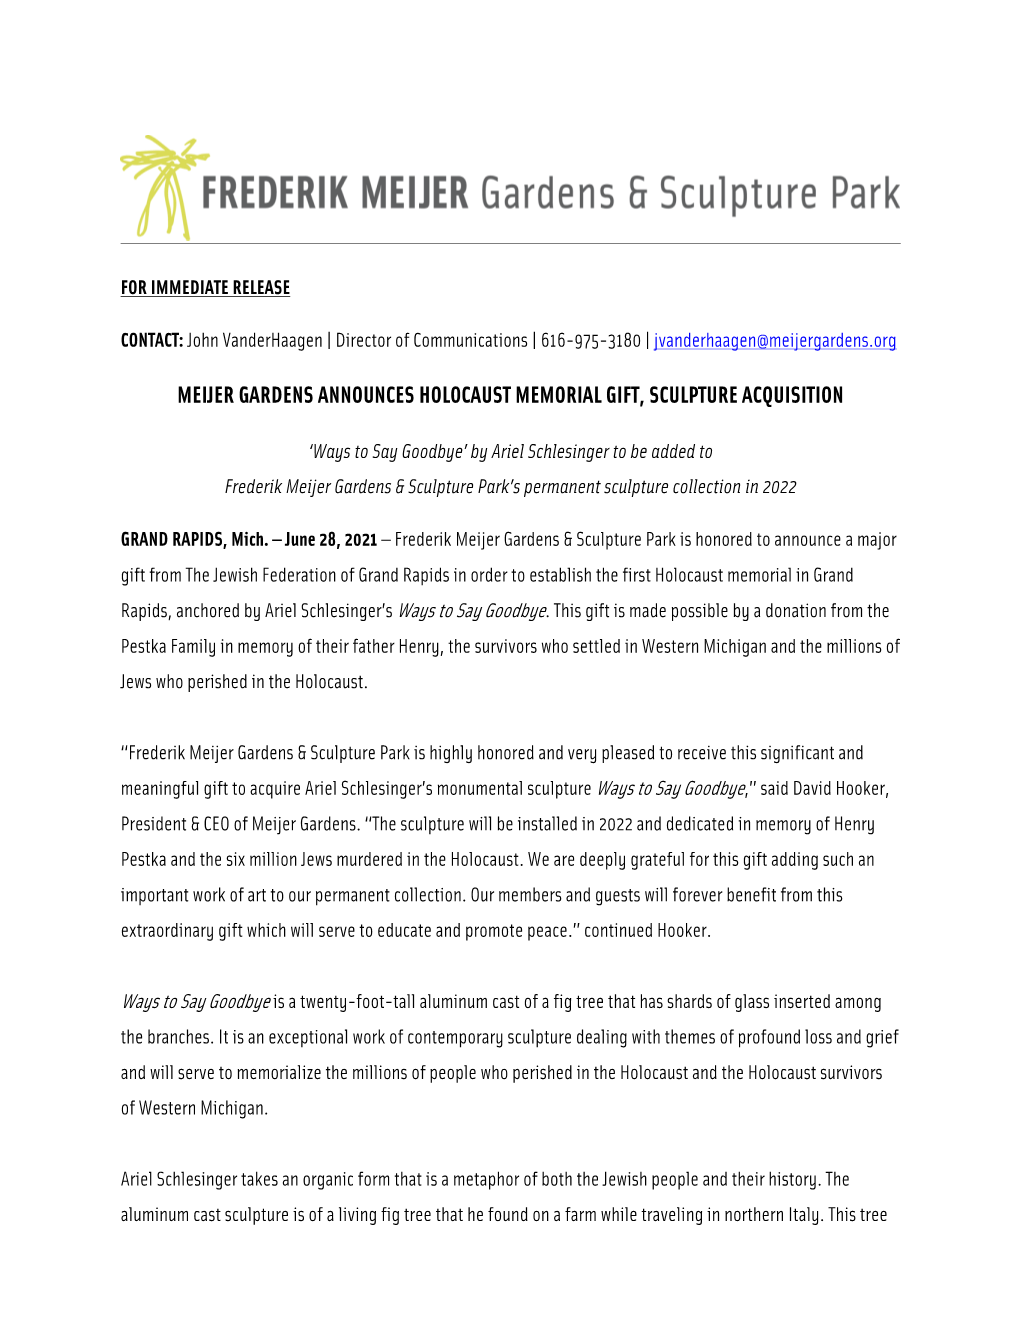 Meijer Gardens Announces Holocaust Memorial Gift, Sculpture Acquisition